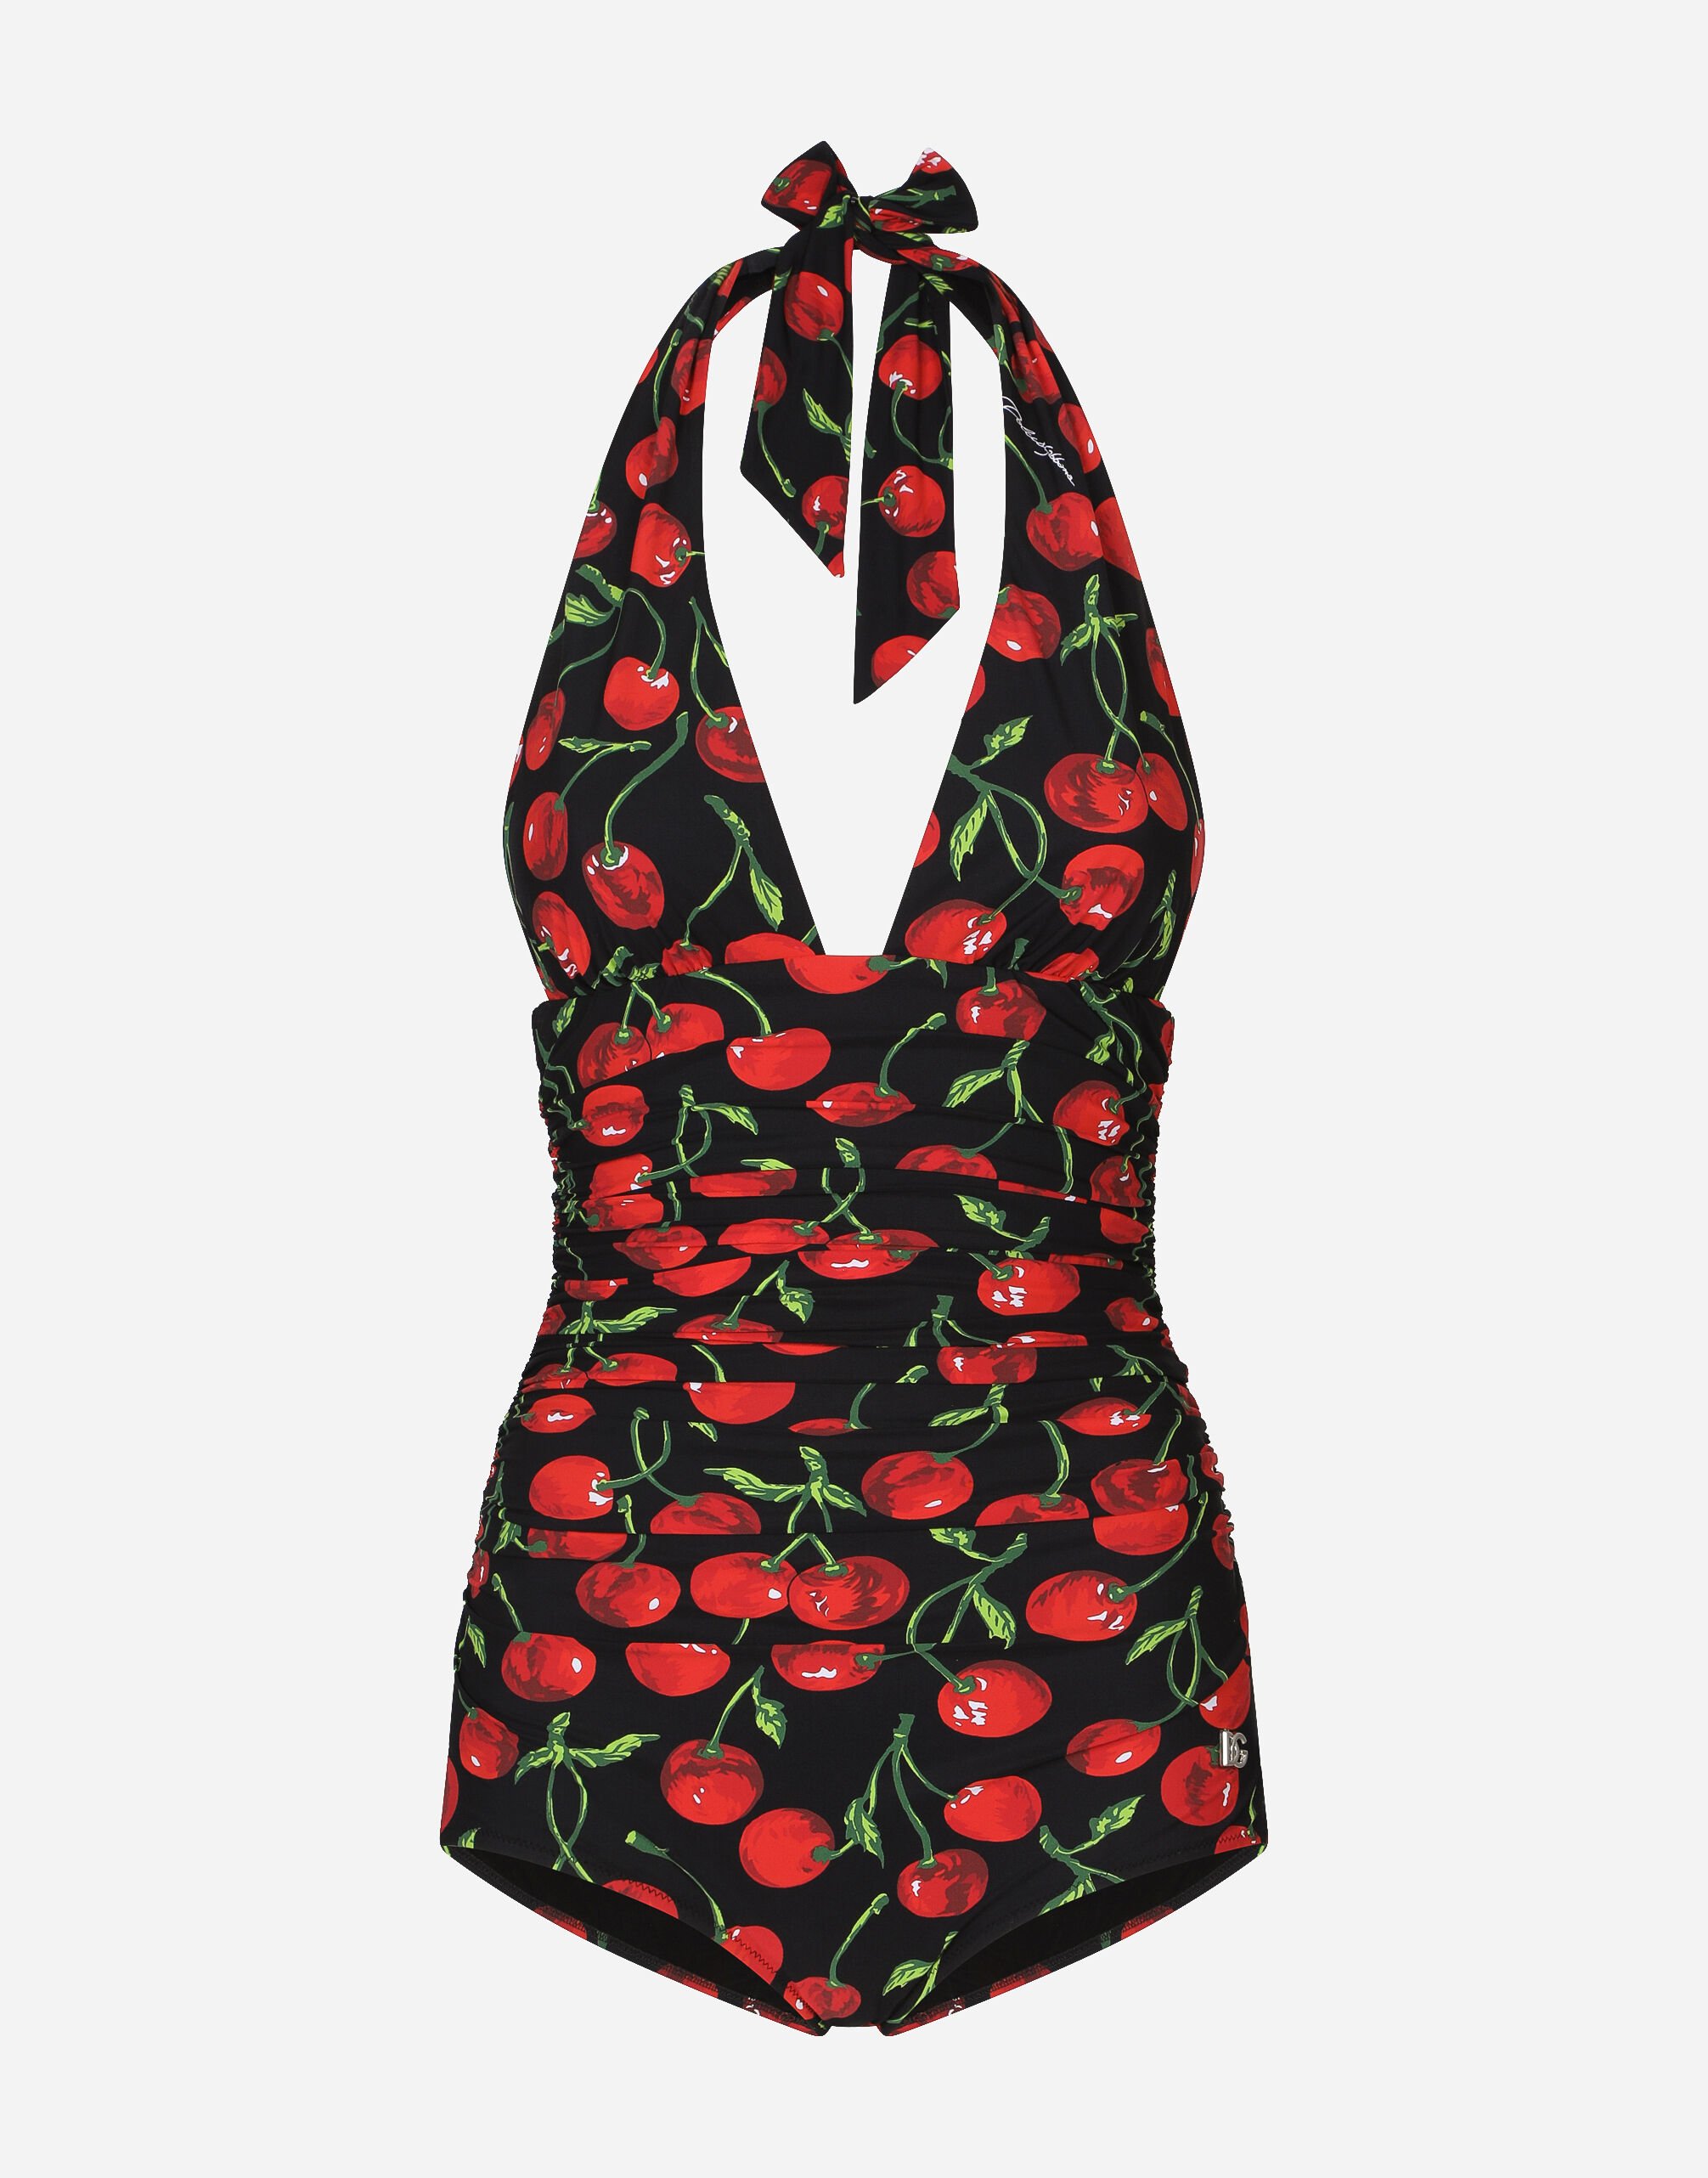 Dolce & Gabbana Cherry-print one-piece swimsuit Print O8B76JFSG8G